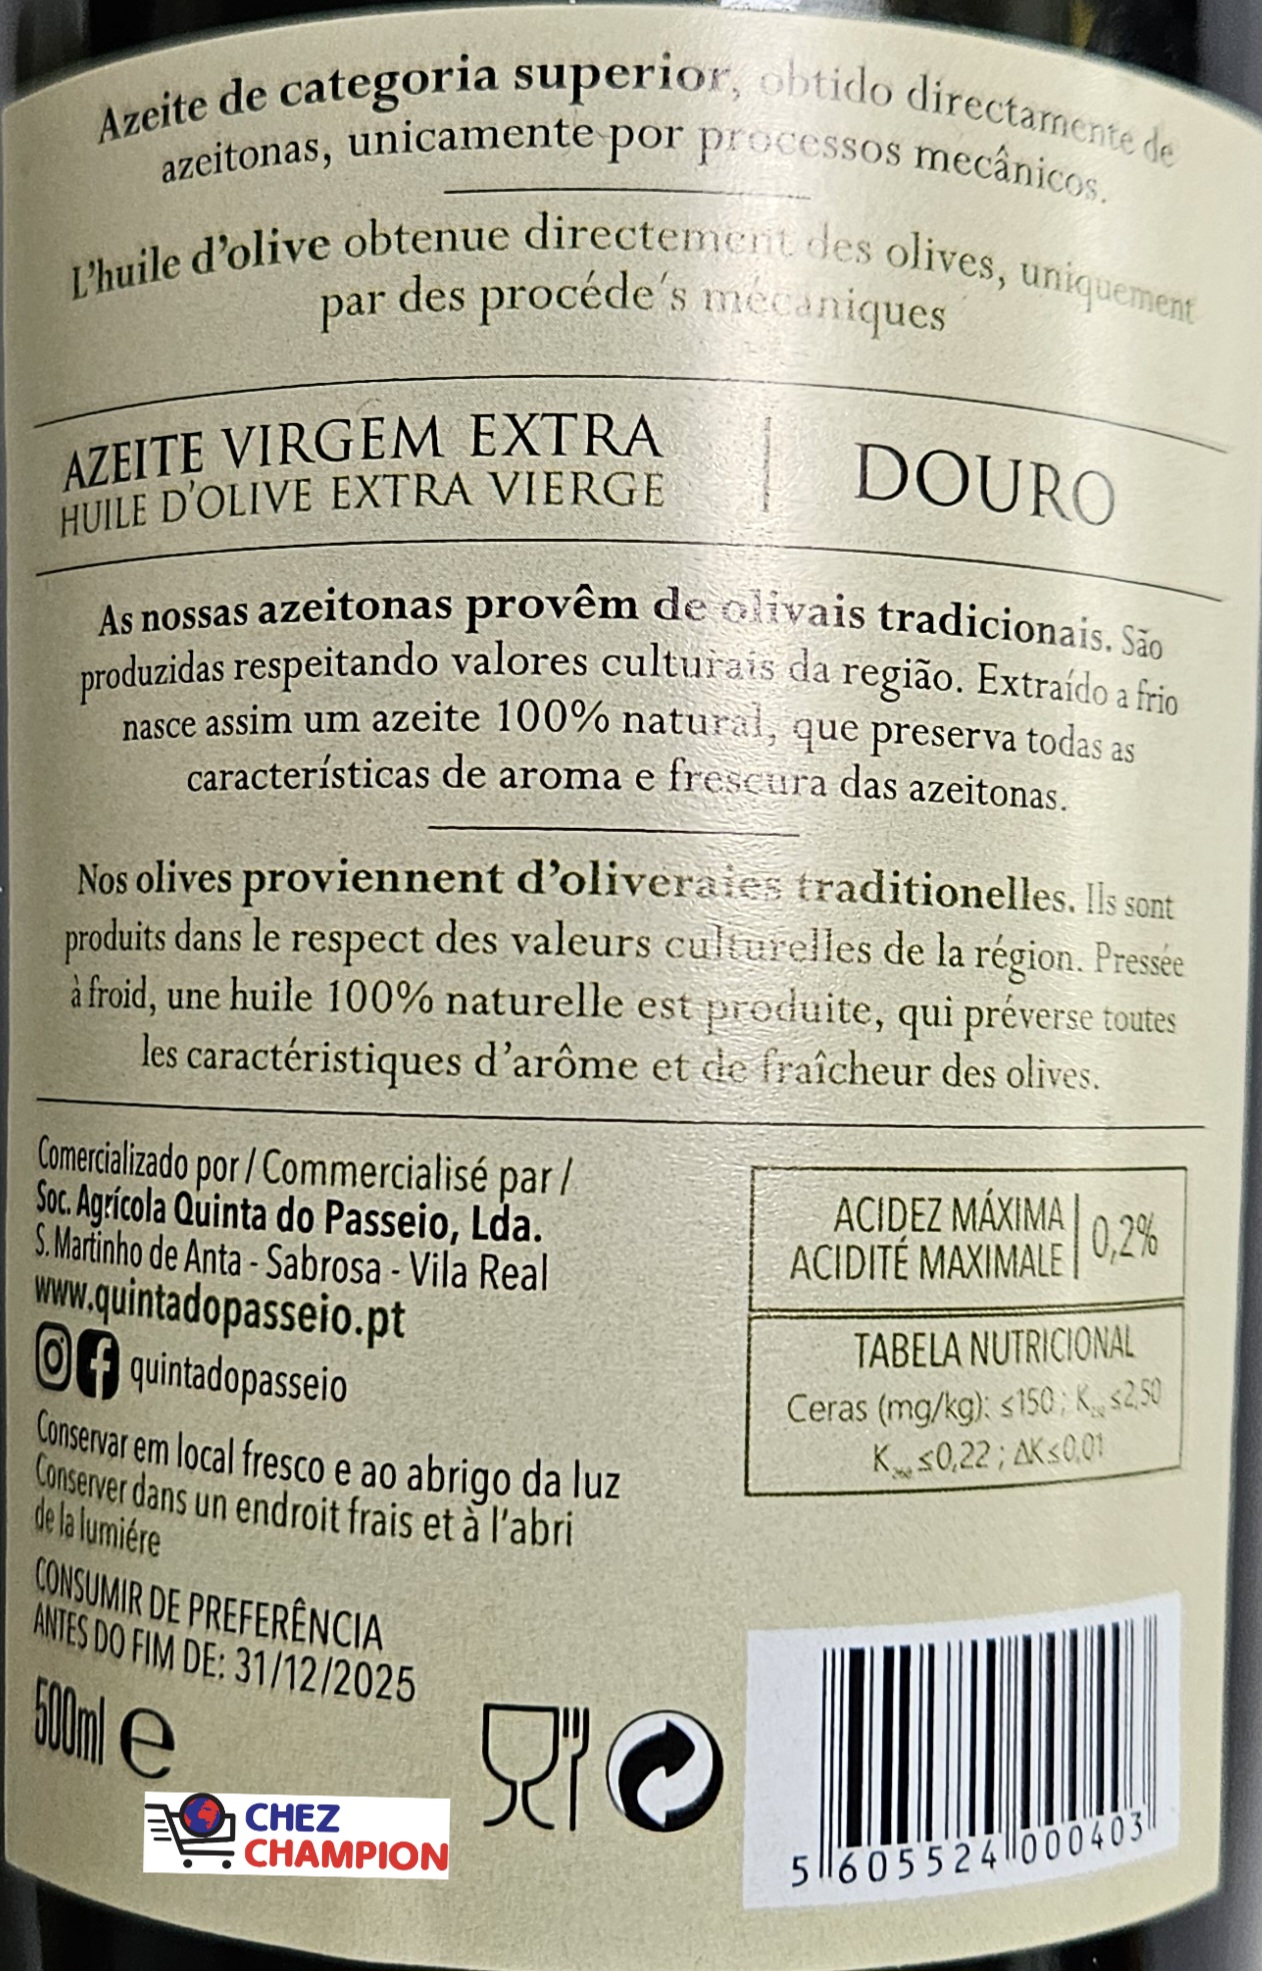 Quinta do passeio azeite virgem extra douro – huile d’olive extra vierge – 500ml